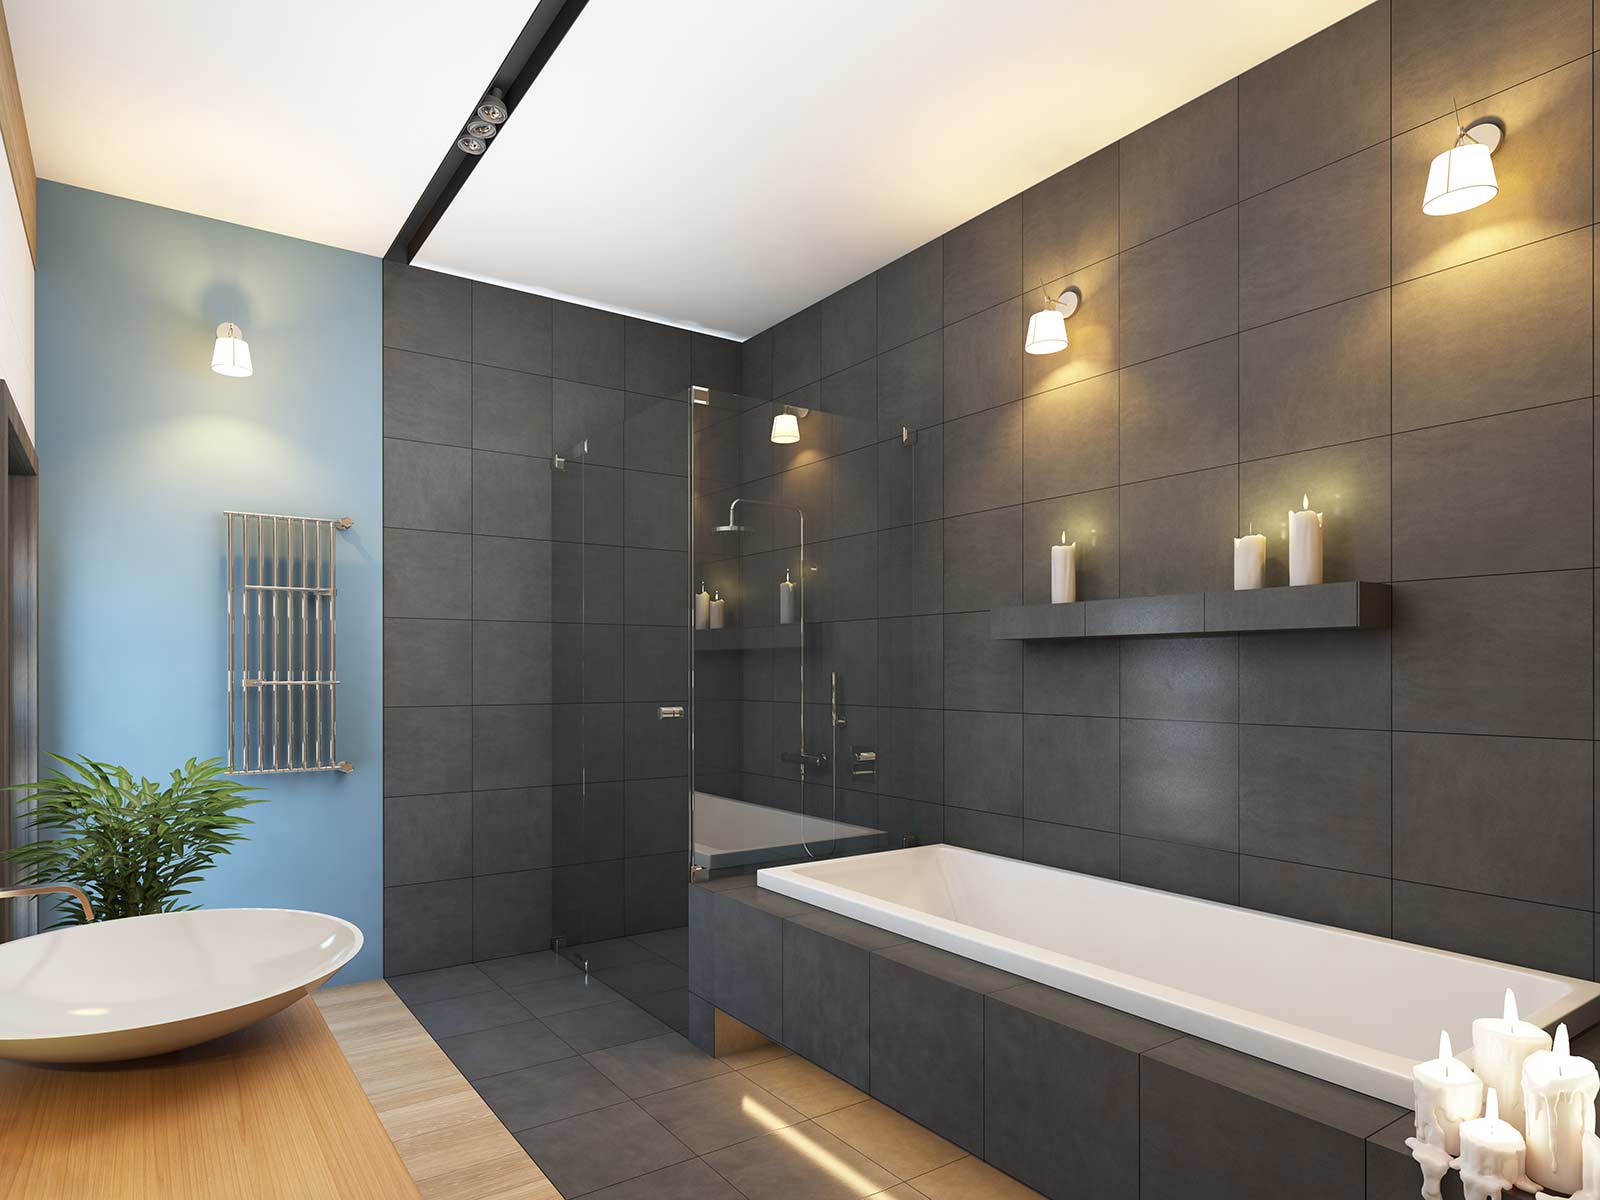 High-quality luxury bathroom fitter West Midlands